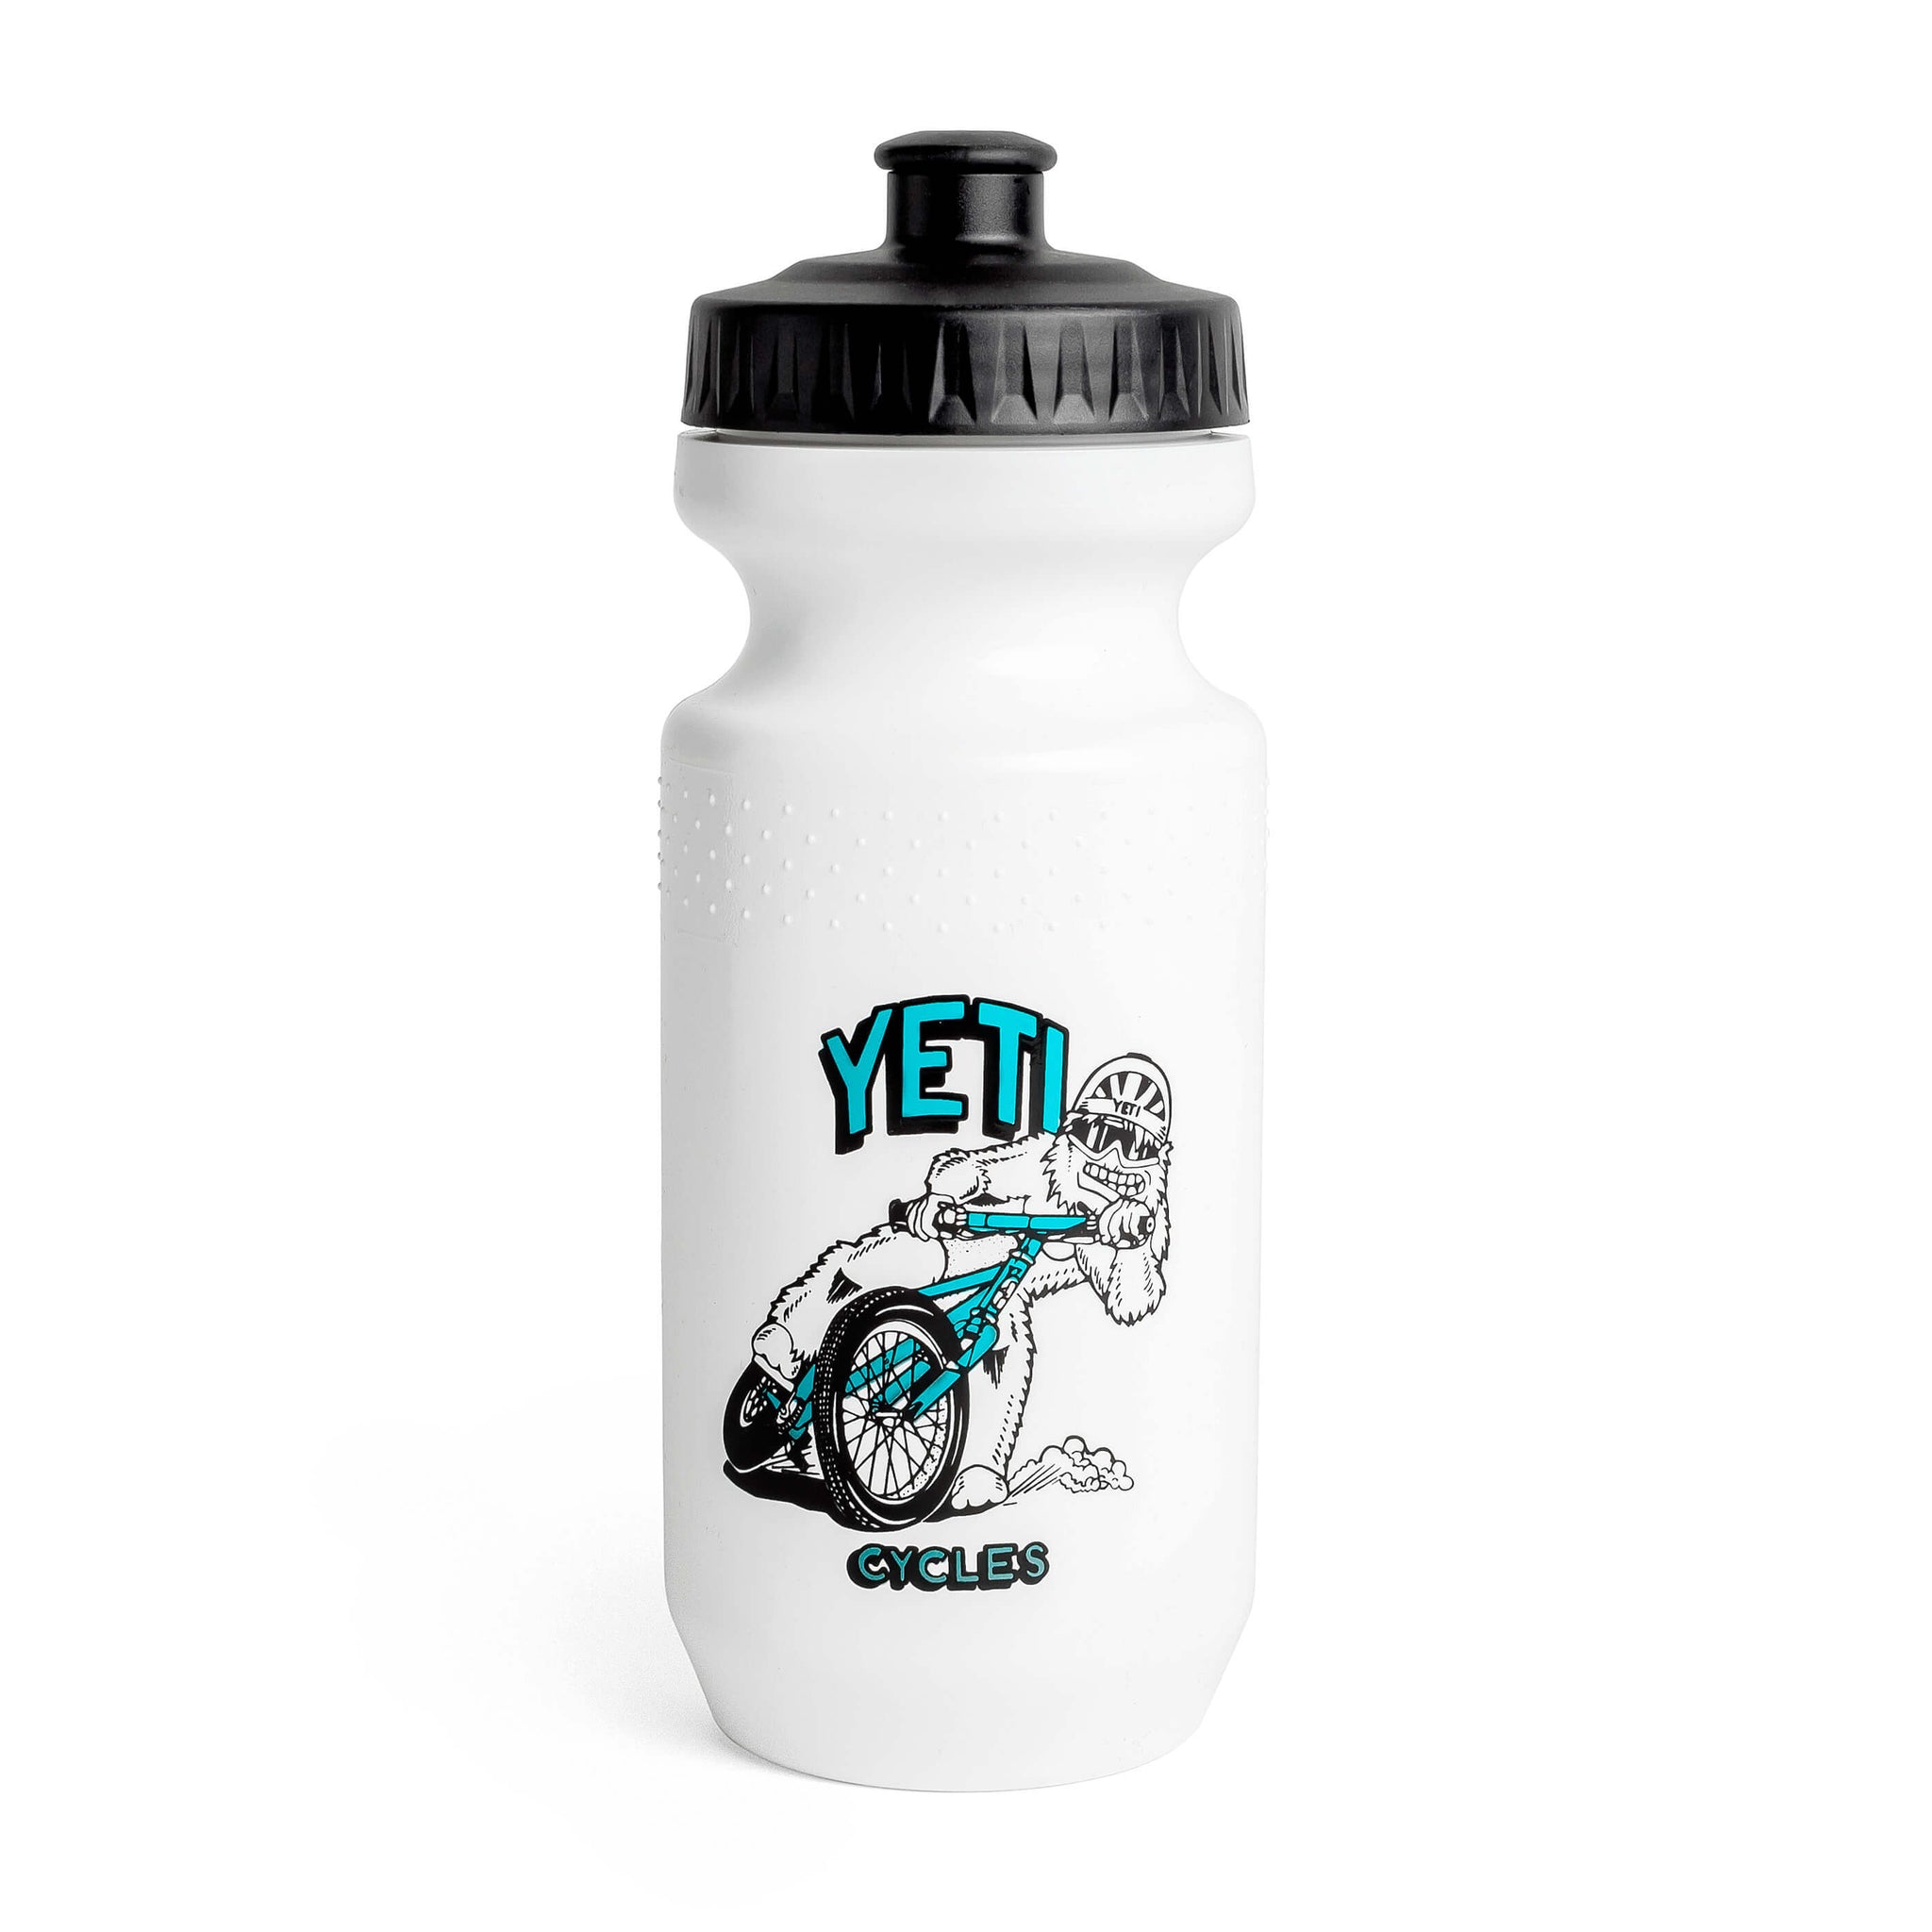 Yeti Cycles Sliding Yetiman Water Bottle White 24 oz. - Wheat